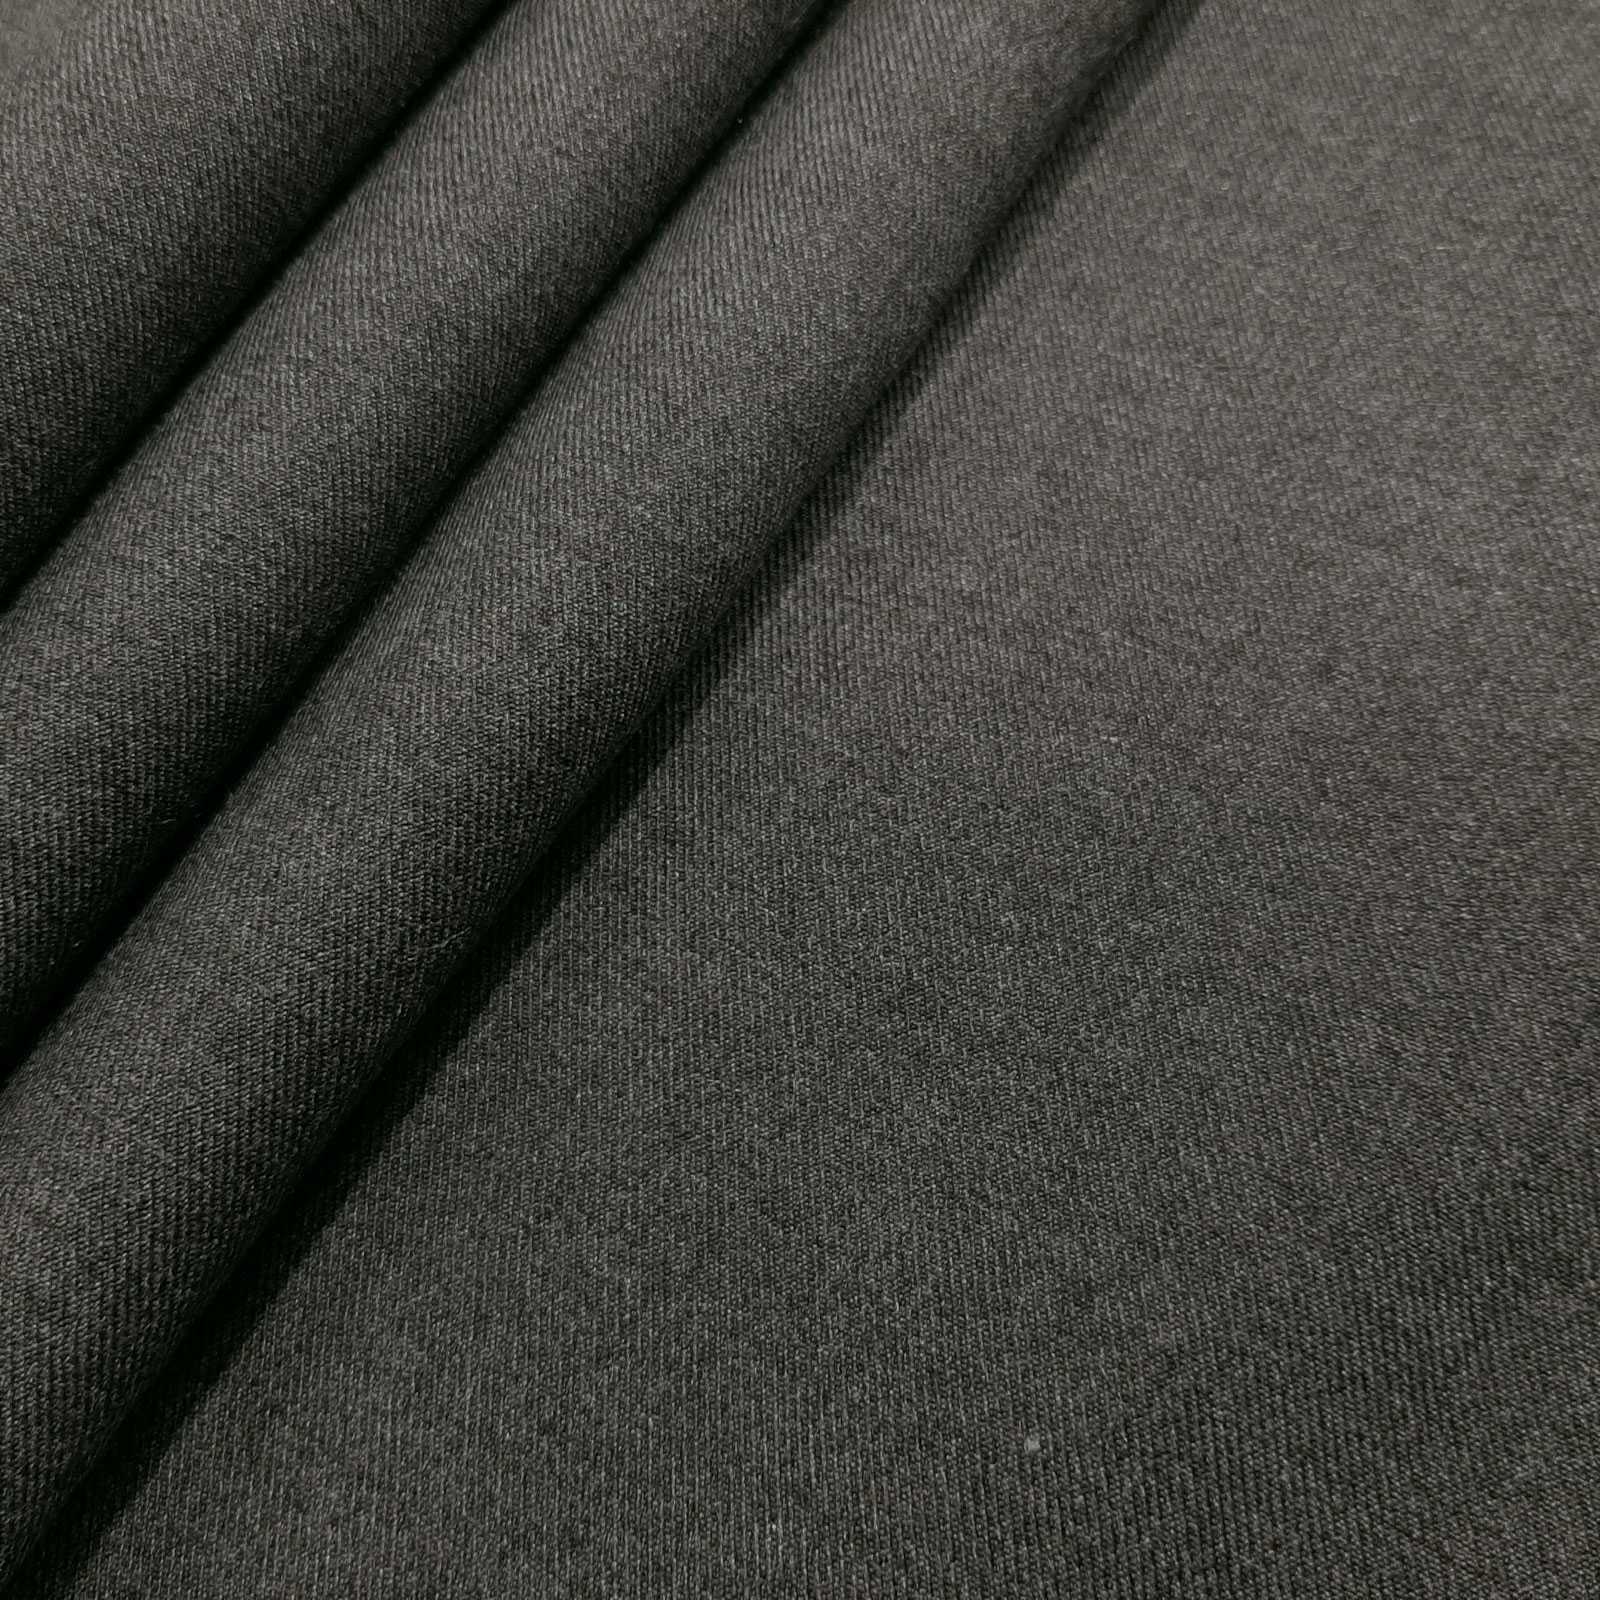 Zafer – Tessuto da rivestimento in lana aramidica - Ignifugo - Grigio scuro melange